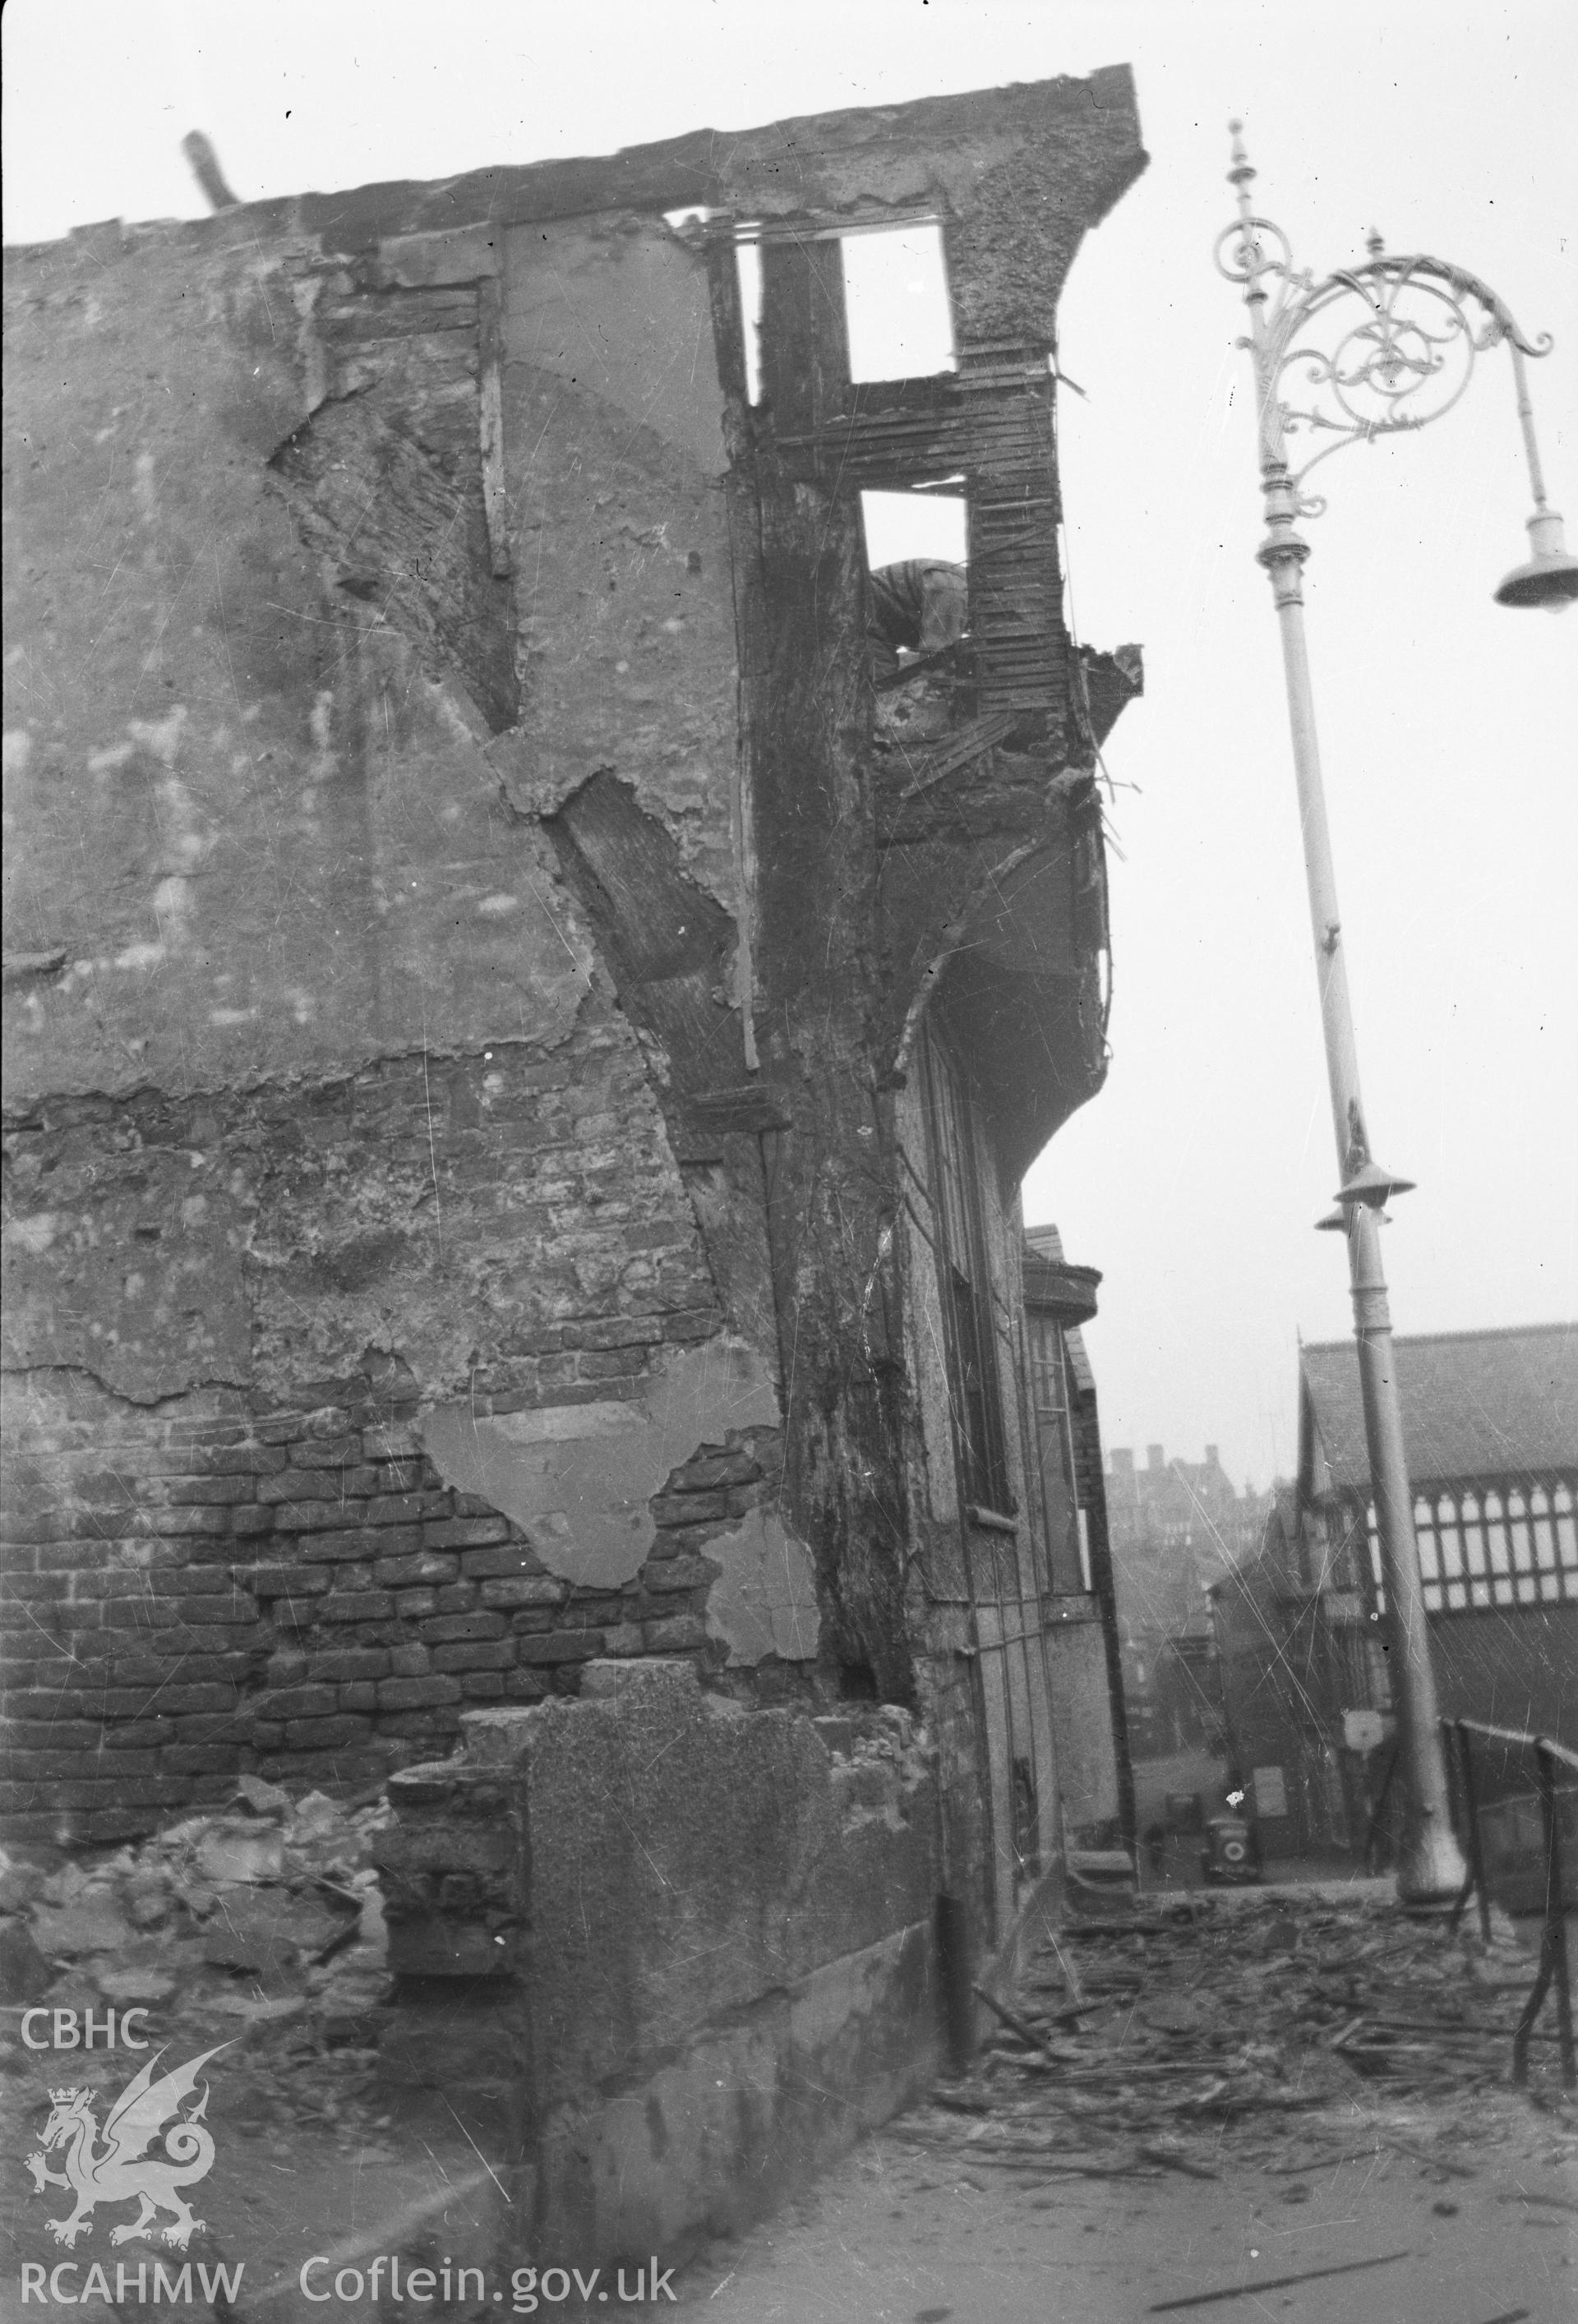 Digital copy of a nitrate negative showing An unidentified building in Wrexham - demolition in progress, taken by RCAHMW.